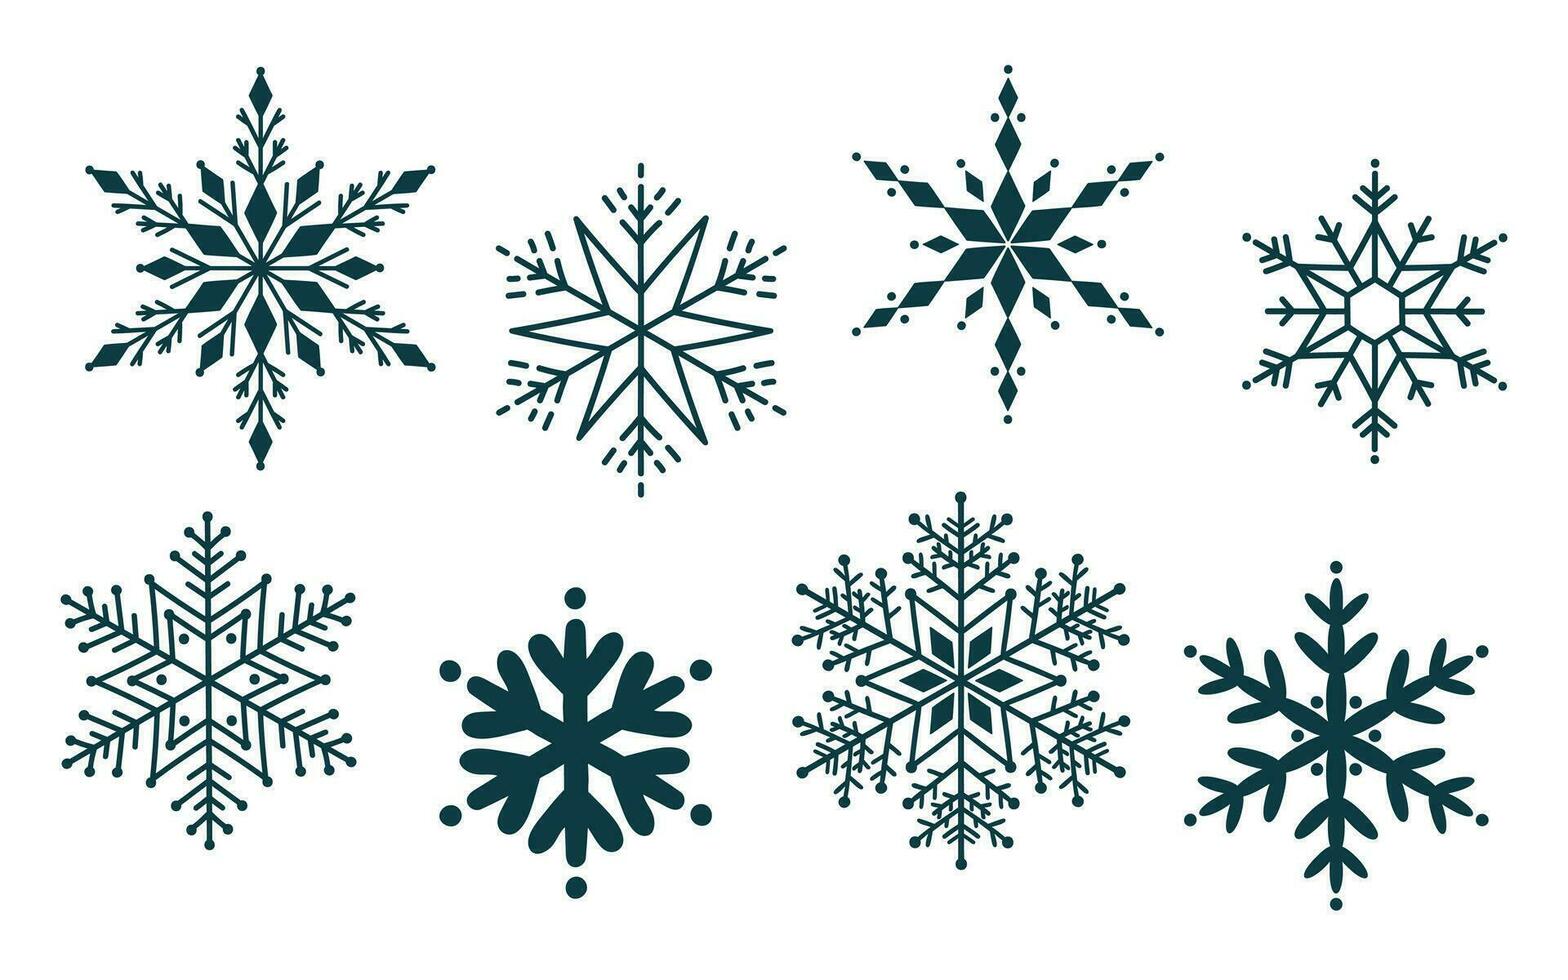 Hand drawn snowflakes icons set. Vector illustration.